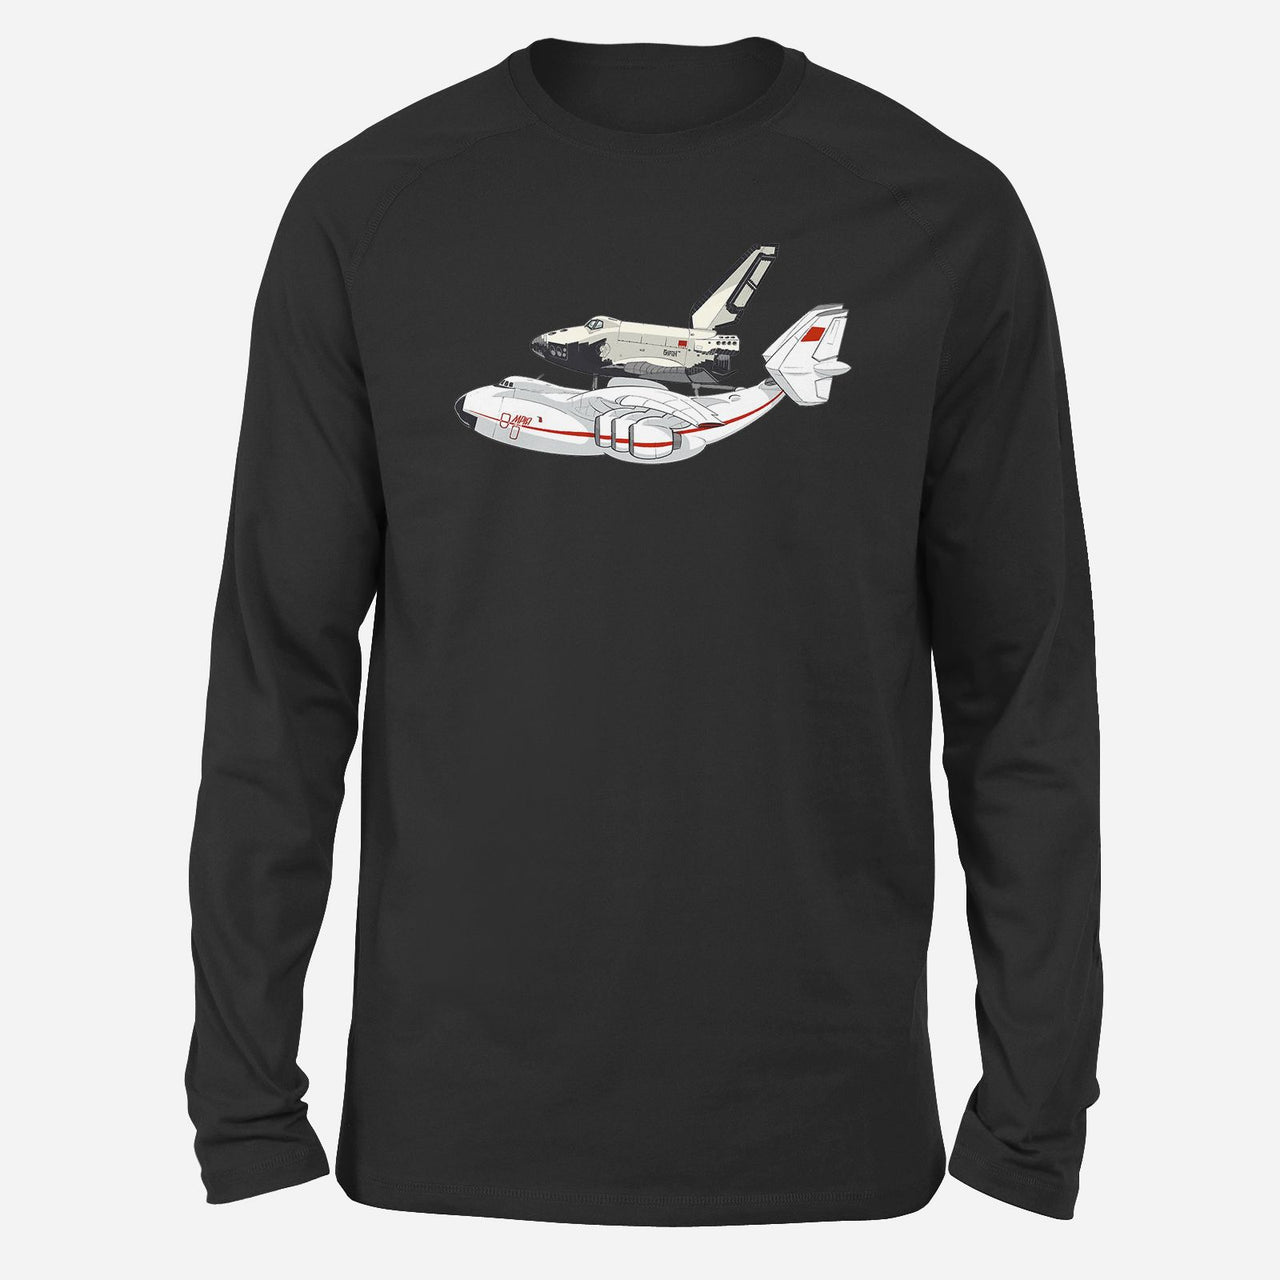 Buran & An-225 Designed Long-Sleeve T-Shirts